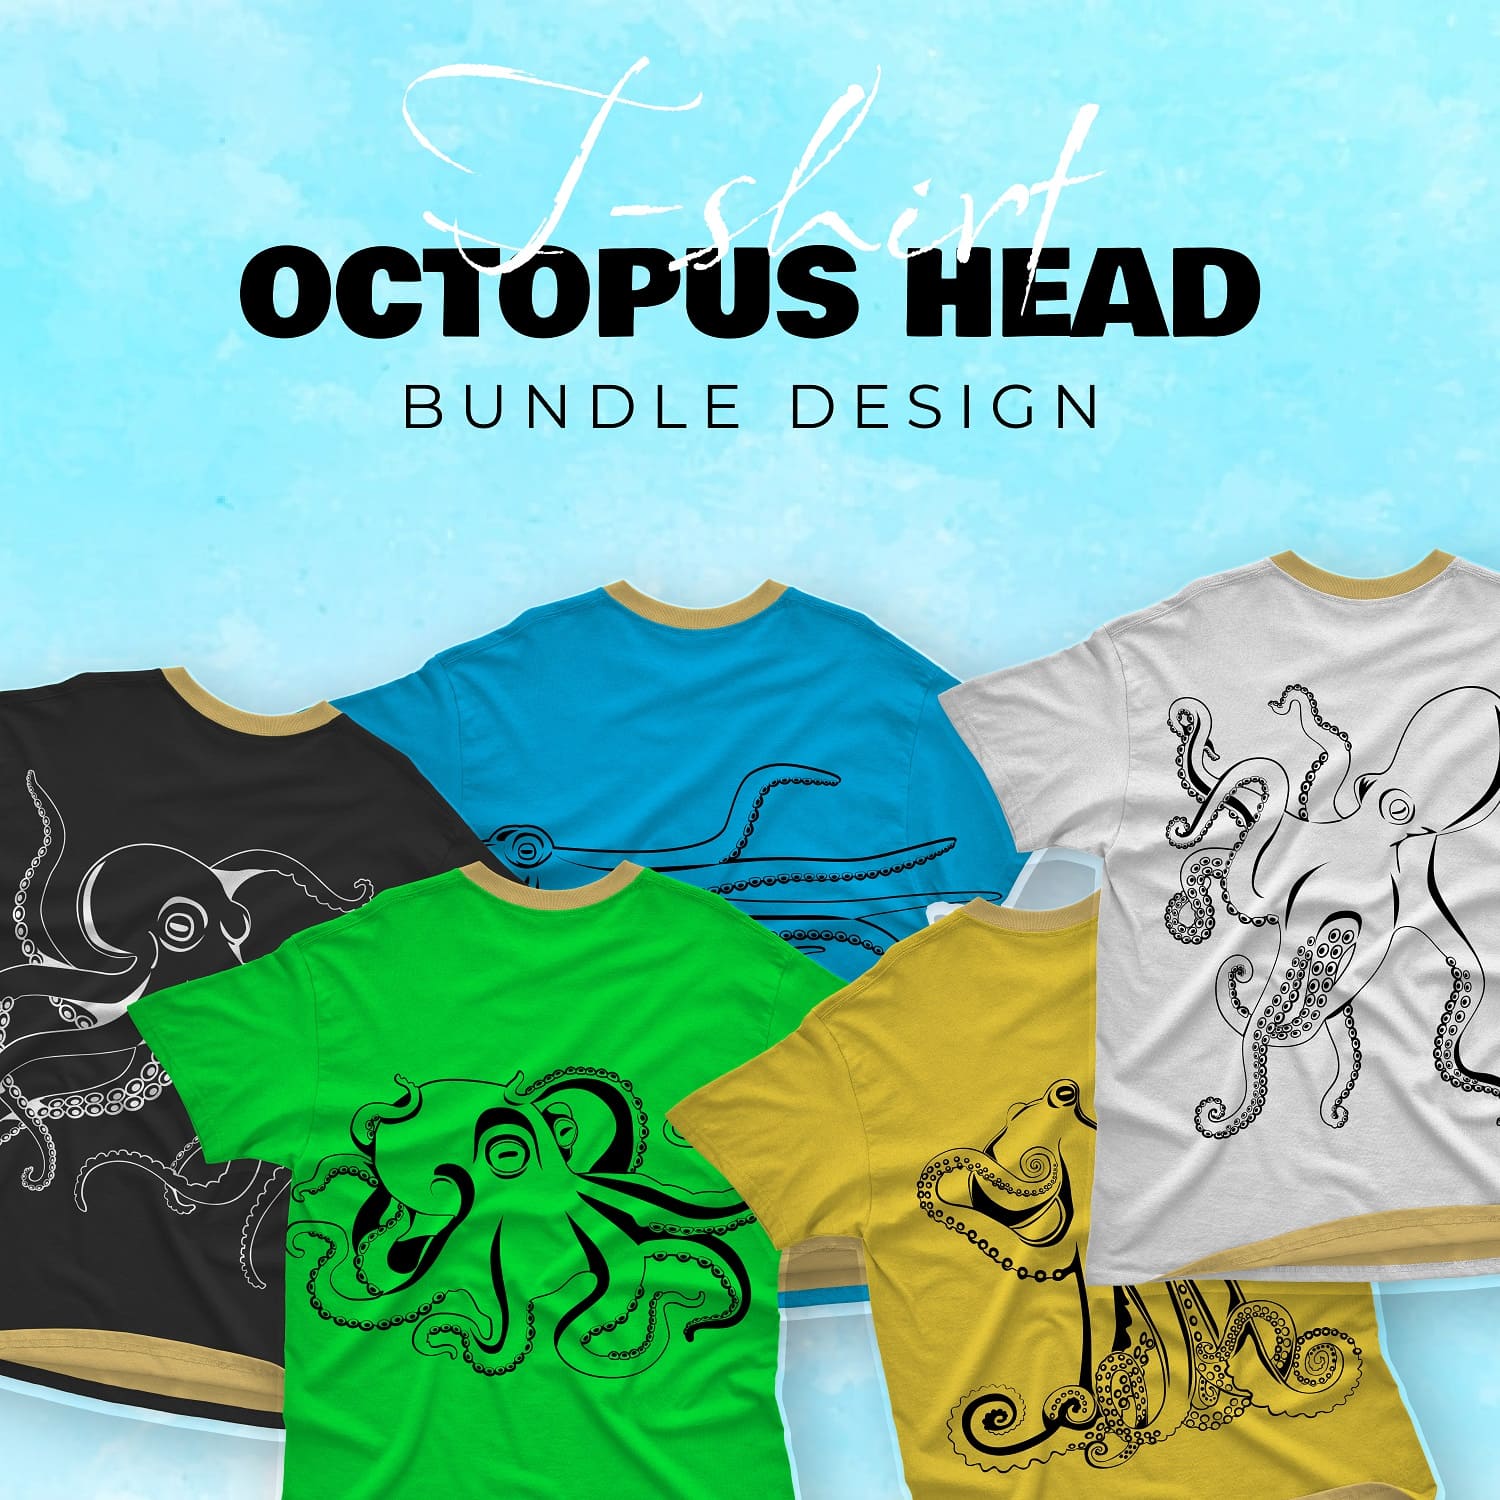 Octopus head t shirt designs bundle.